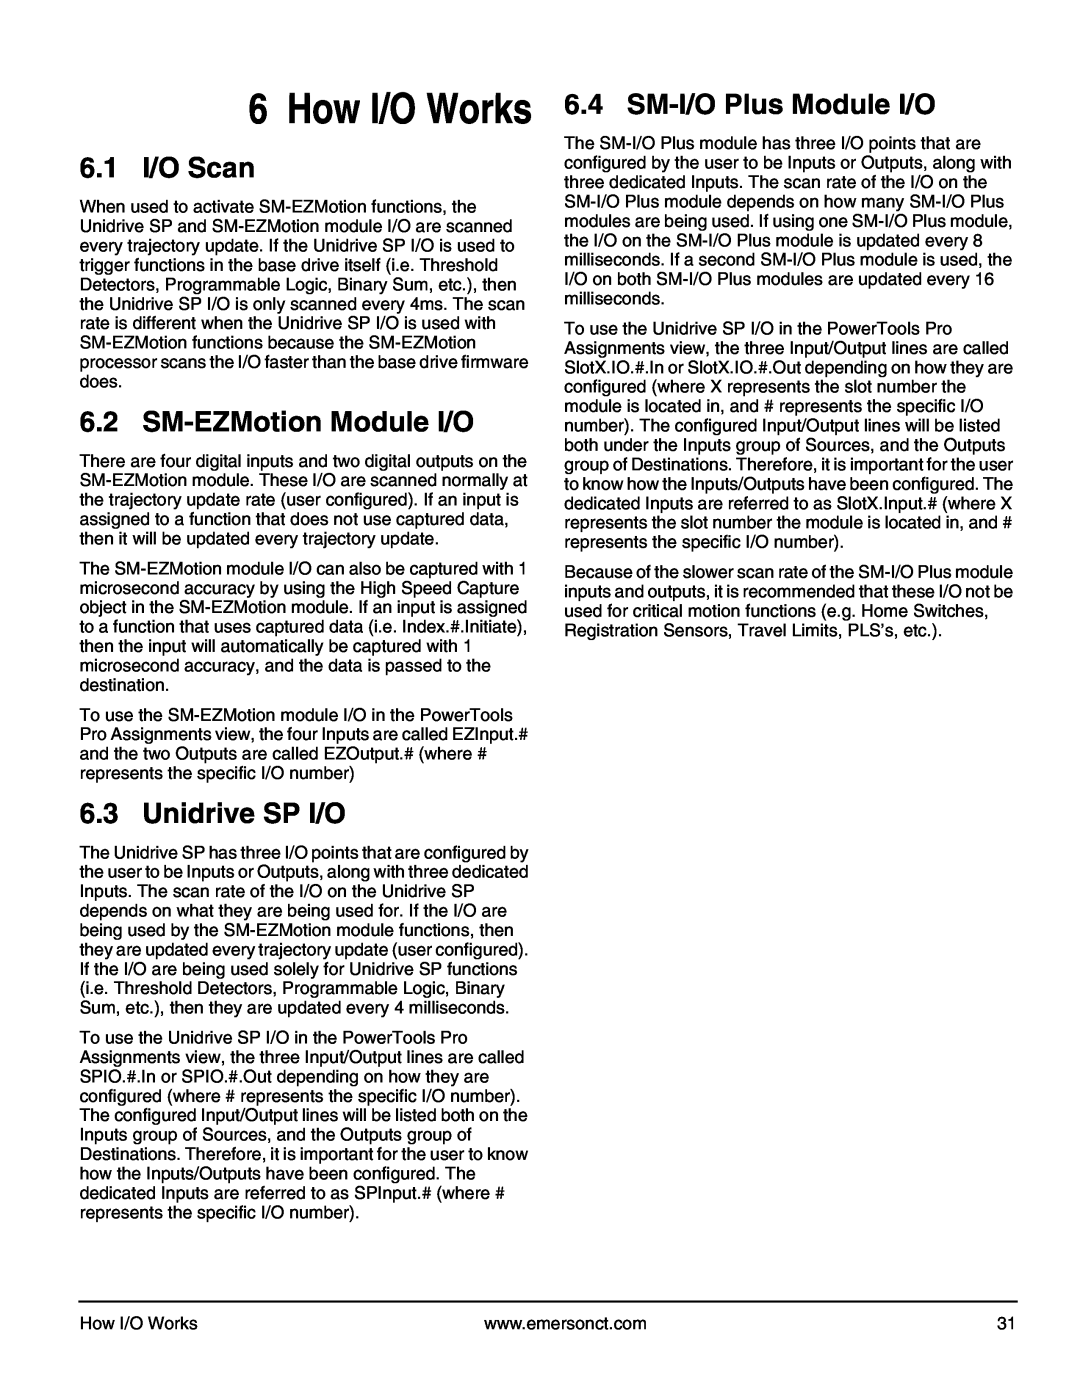 Emerson P/N 400361-00 manual How I/O Works, 6.1 I/O Scan, SM-EZMotion Module I/O, Unidrive SP I/O, SM-I/O Plus Module I/O 